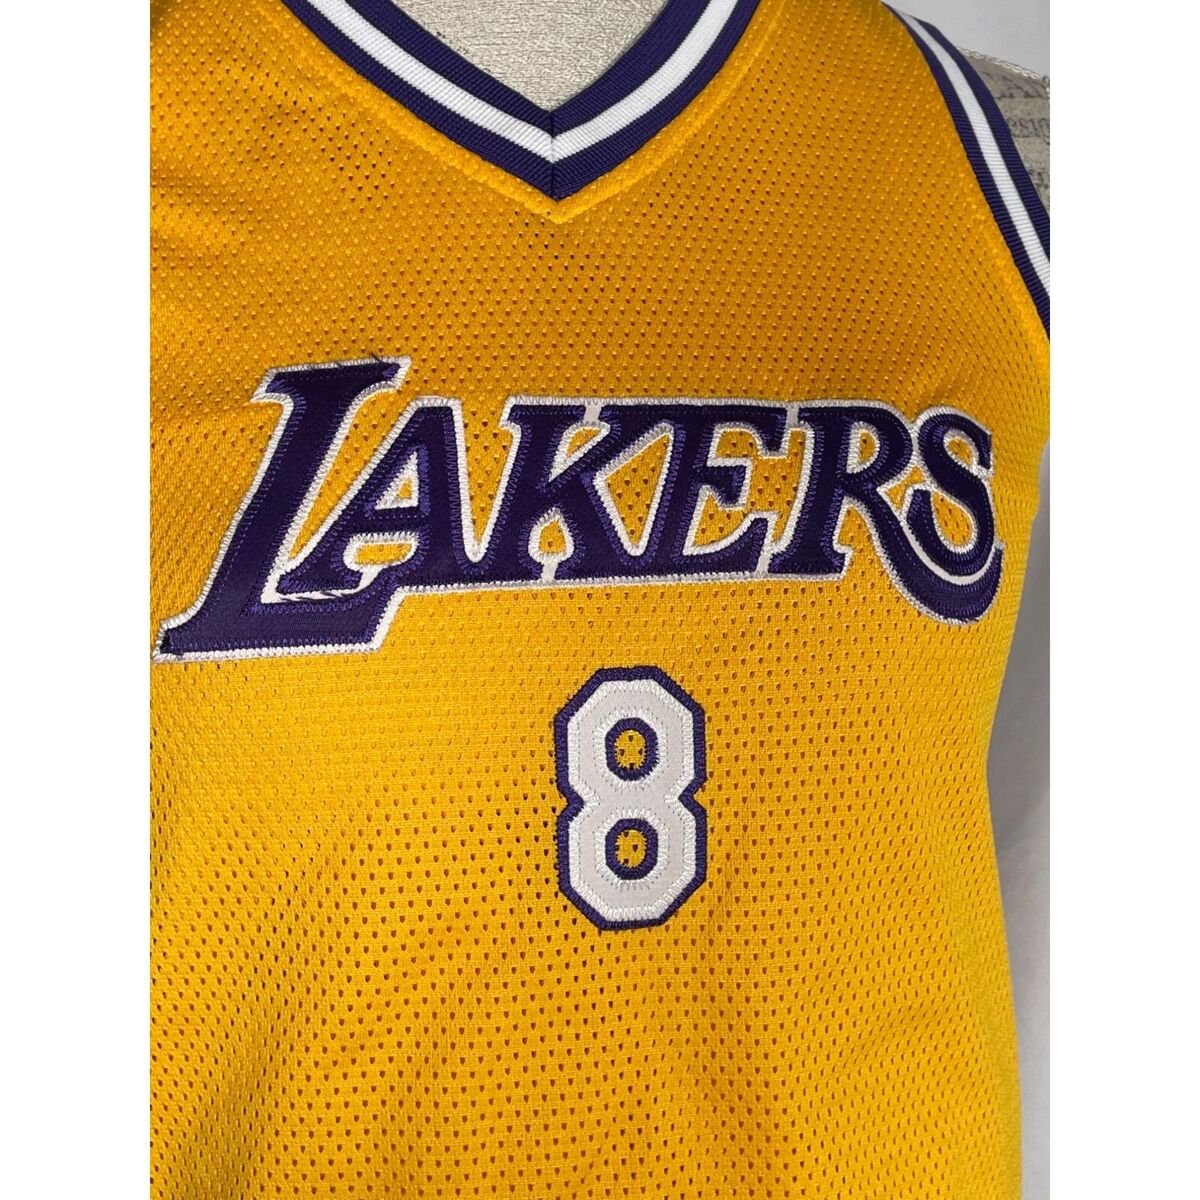 Reebok, Tops, Nba Reebok Lakers Kobe Bryant 8 Jersey Dress